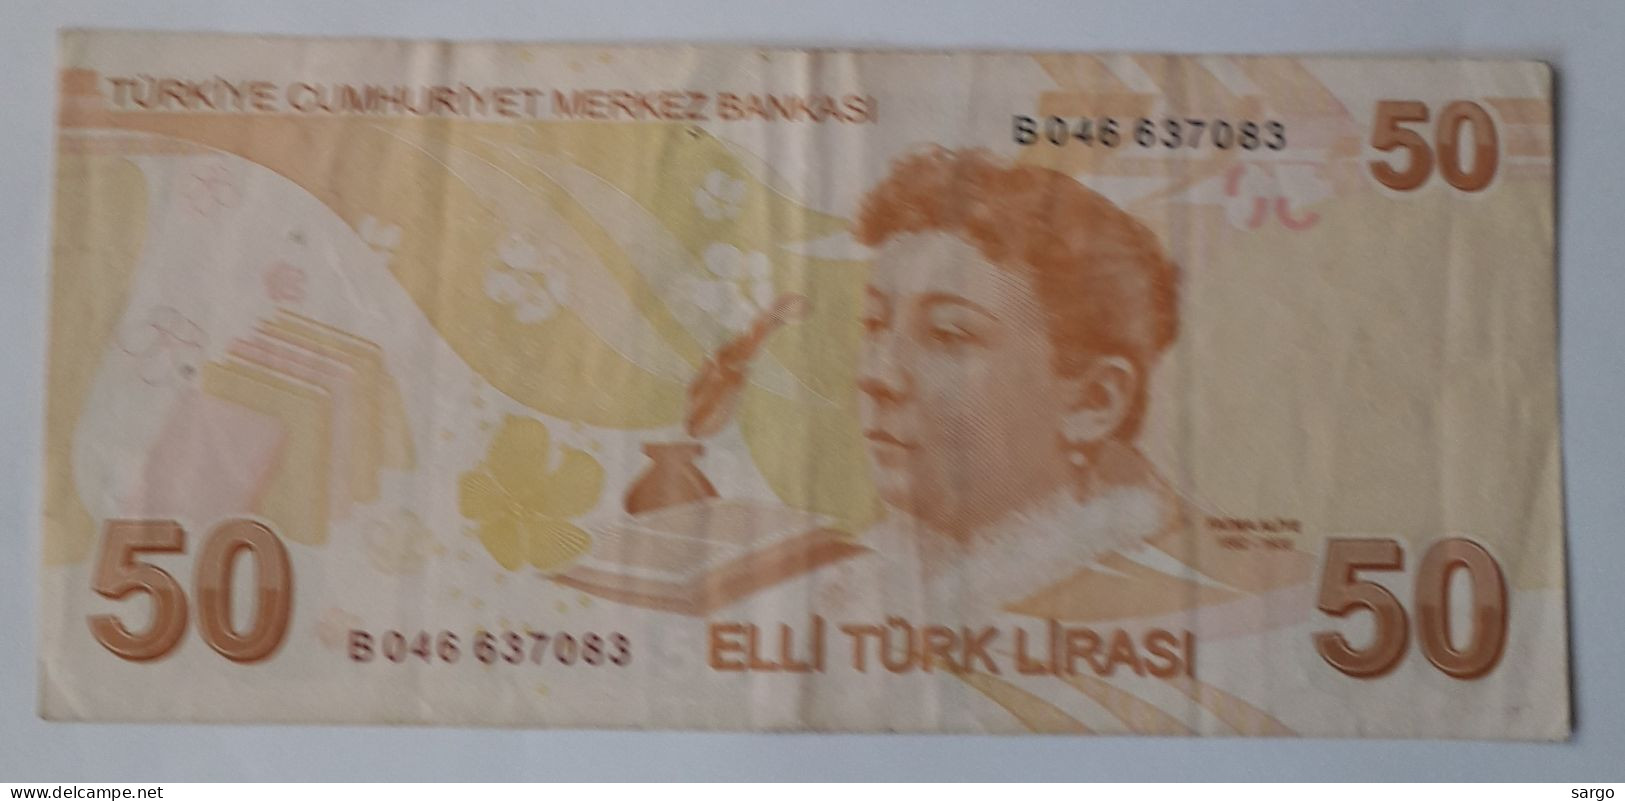 TURKEY - 50 LIRA -  P 225 - 2009/2022 - CIRC - BANKNOTES - PAPER MONEY - CARTAMONETA - - Turkey